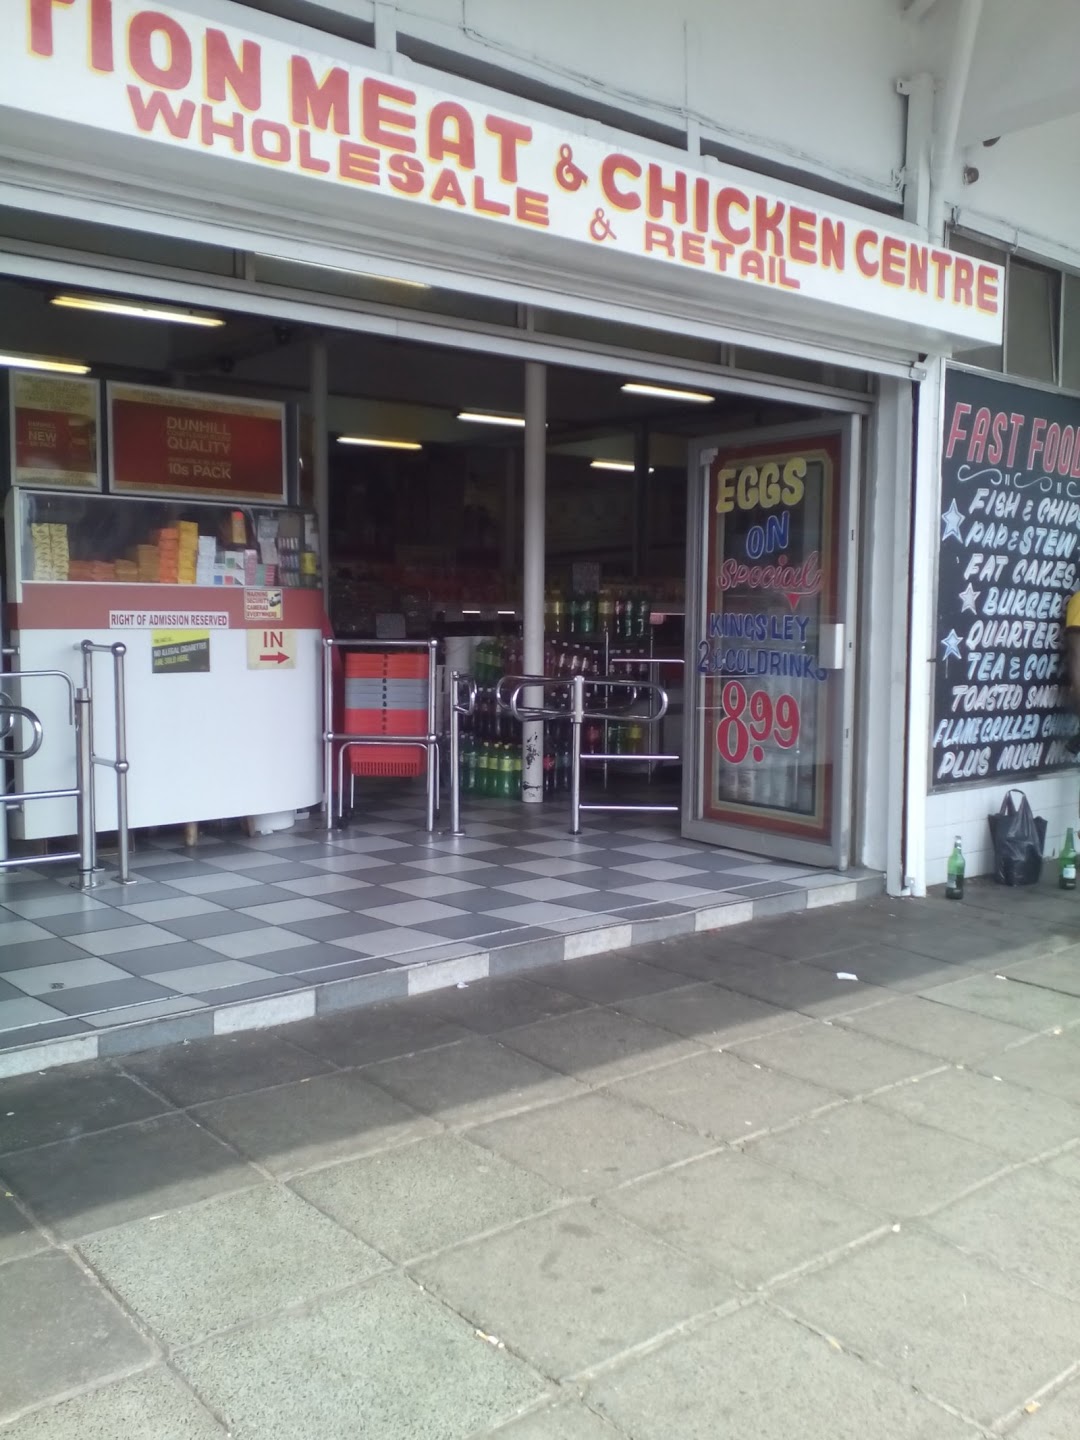 Station Meat & Chicken Centre